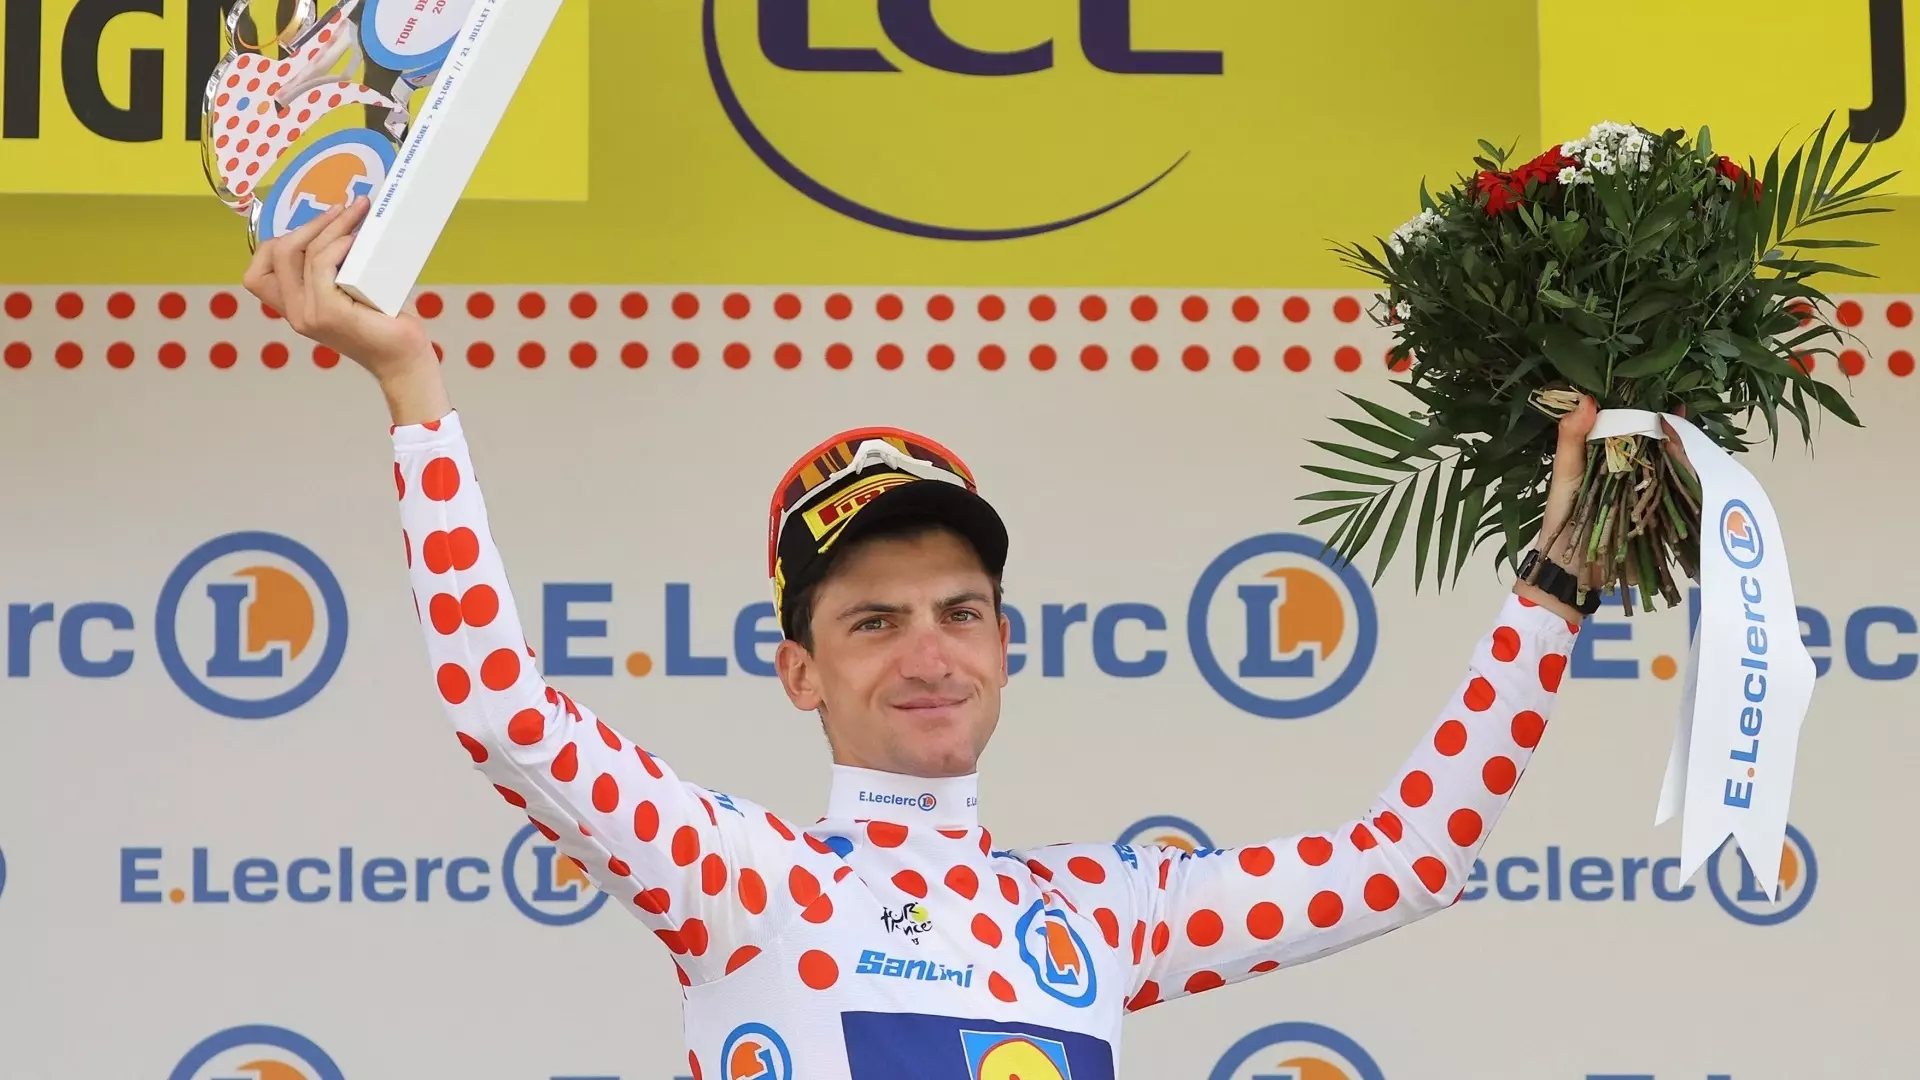 Tour de France: Giulio Ciccone vince la maglia a pois. A Tadej Pogacar la ventesima tappa